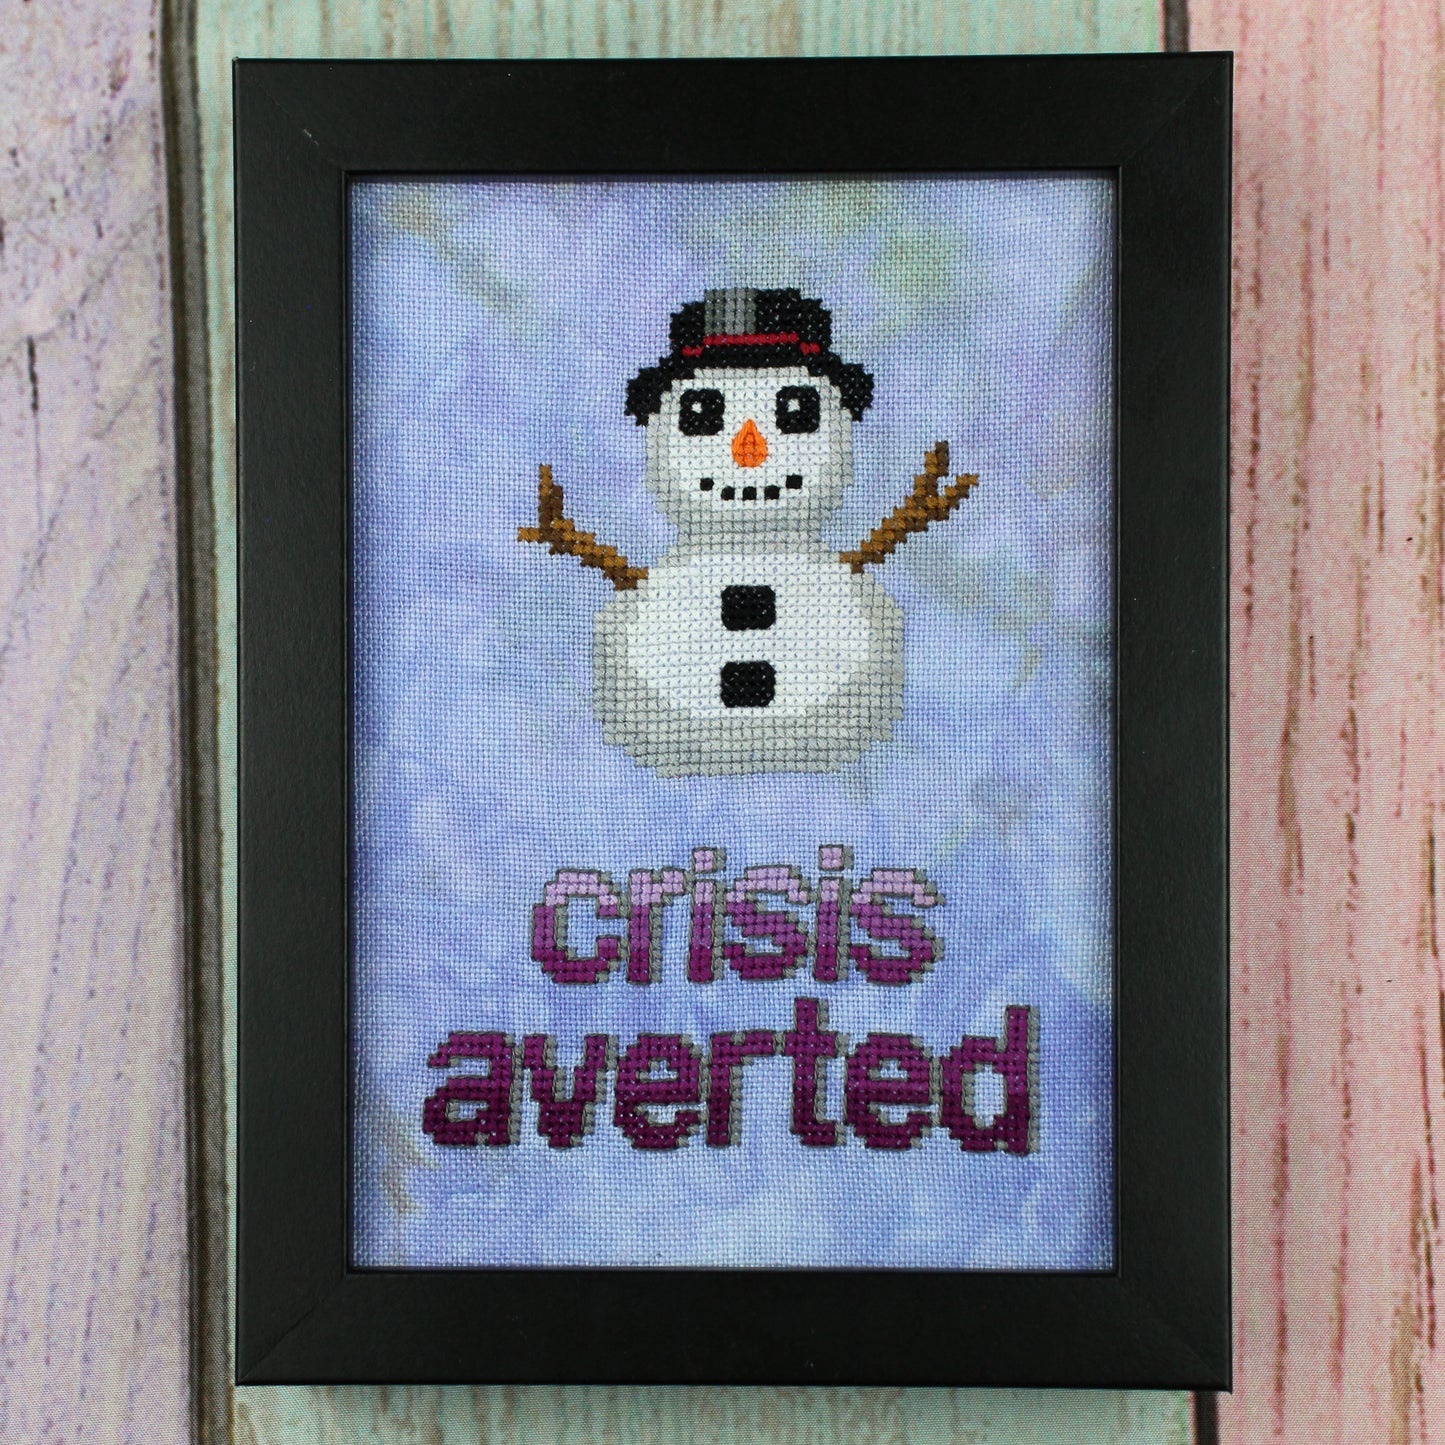 Crisis Averted (Snowman Emoji) Cross Stitch Pattern - instant PDF Download